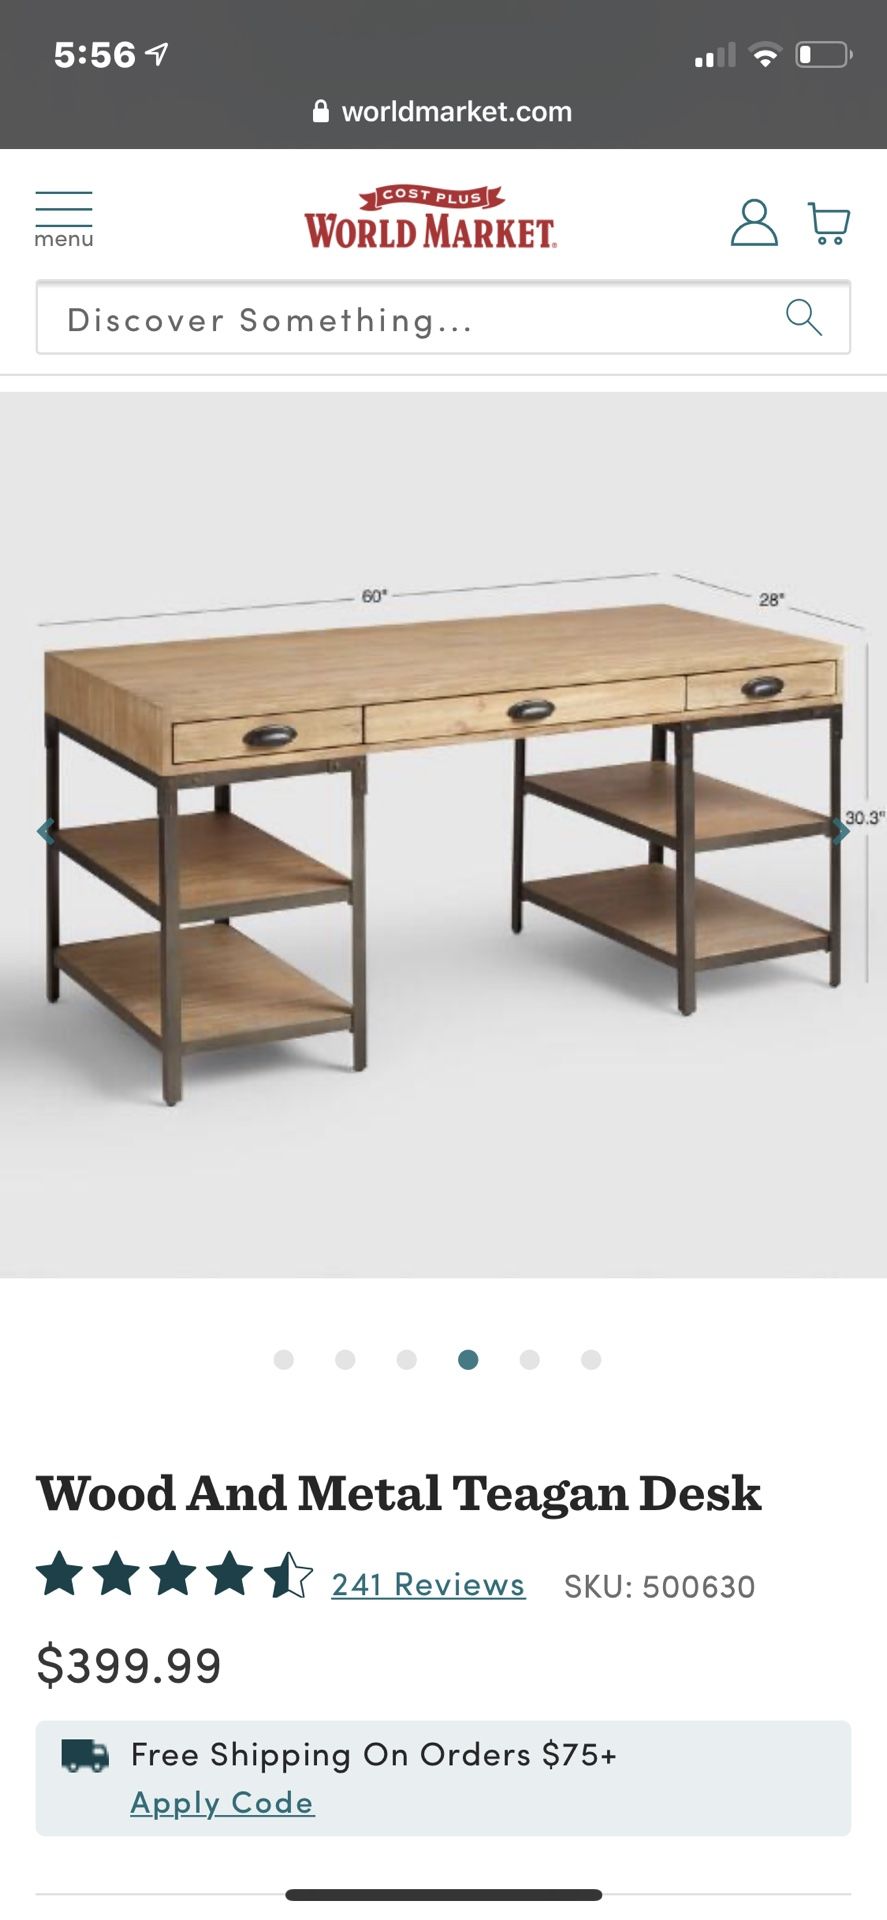 Wood and Metal Teagan Desk